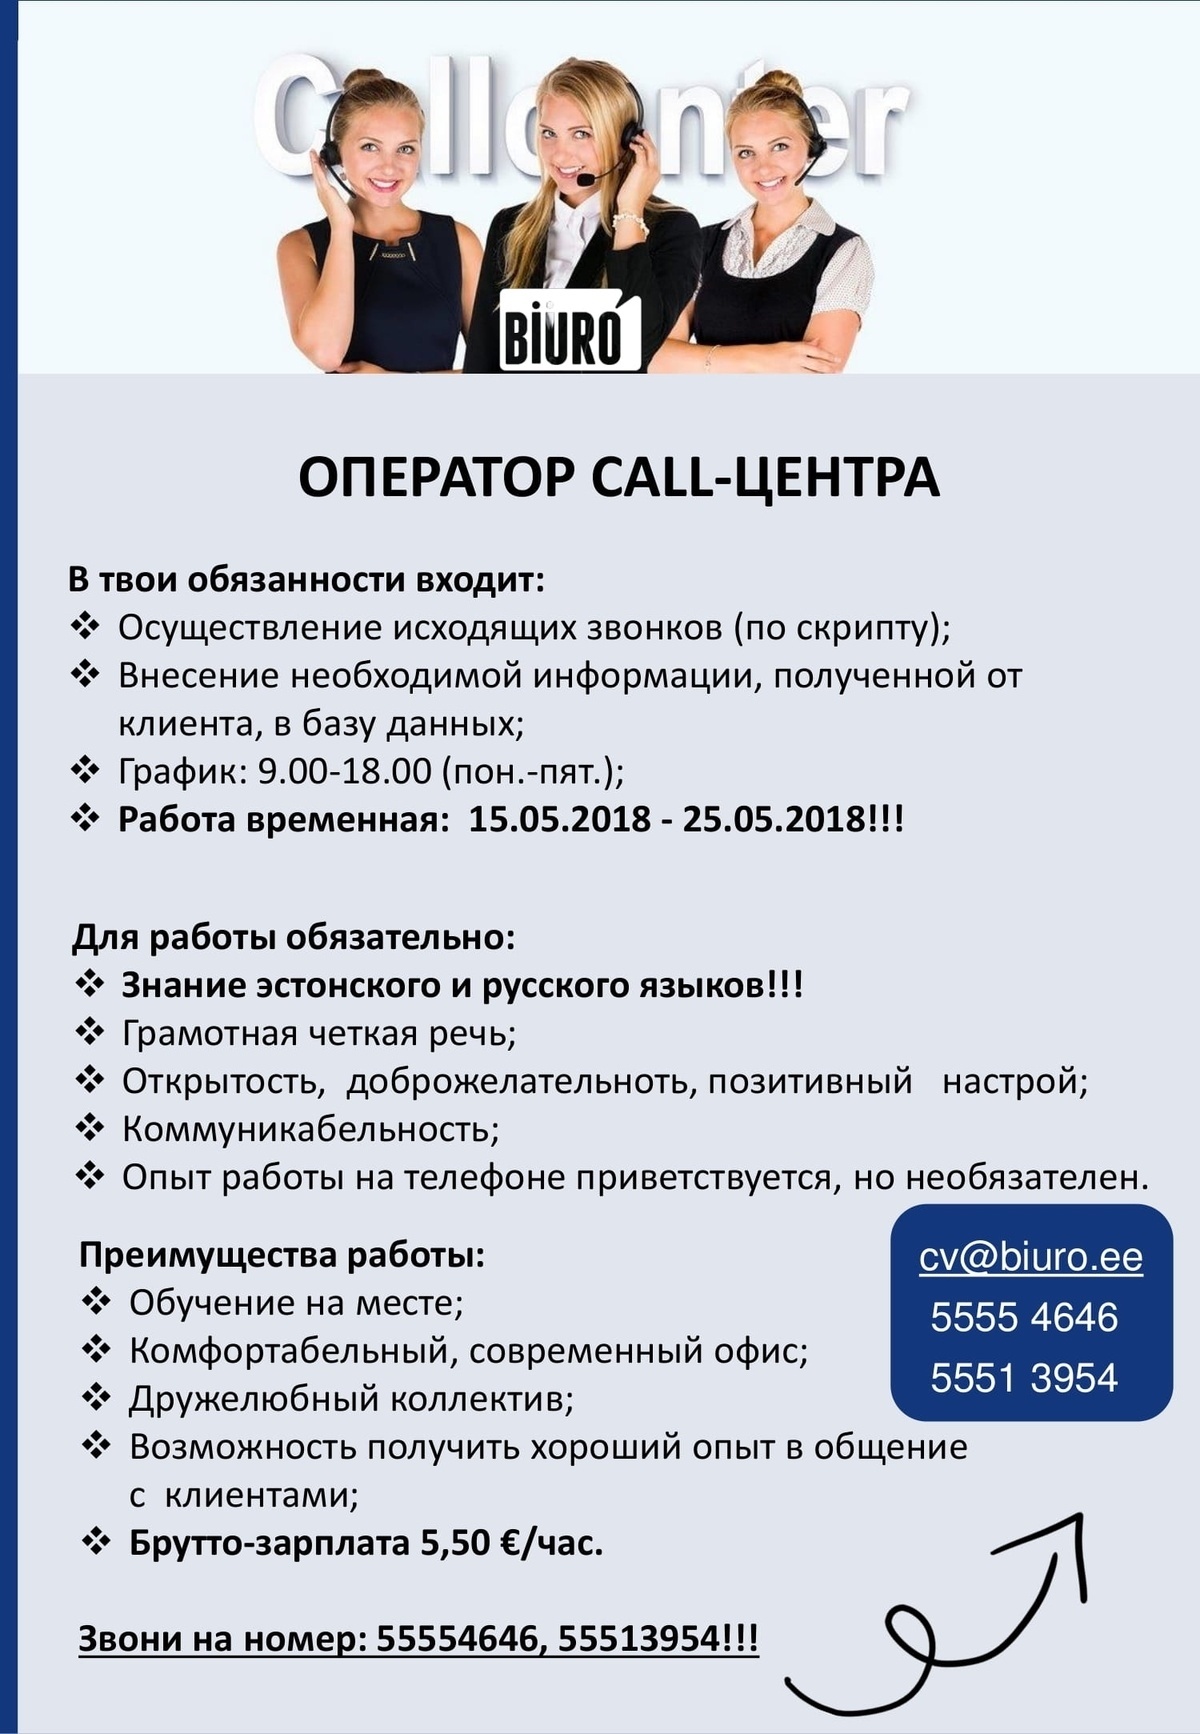 Biuro OÜ Оператор call-центра